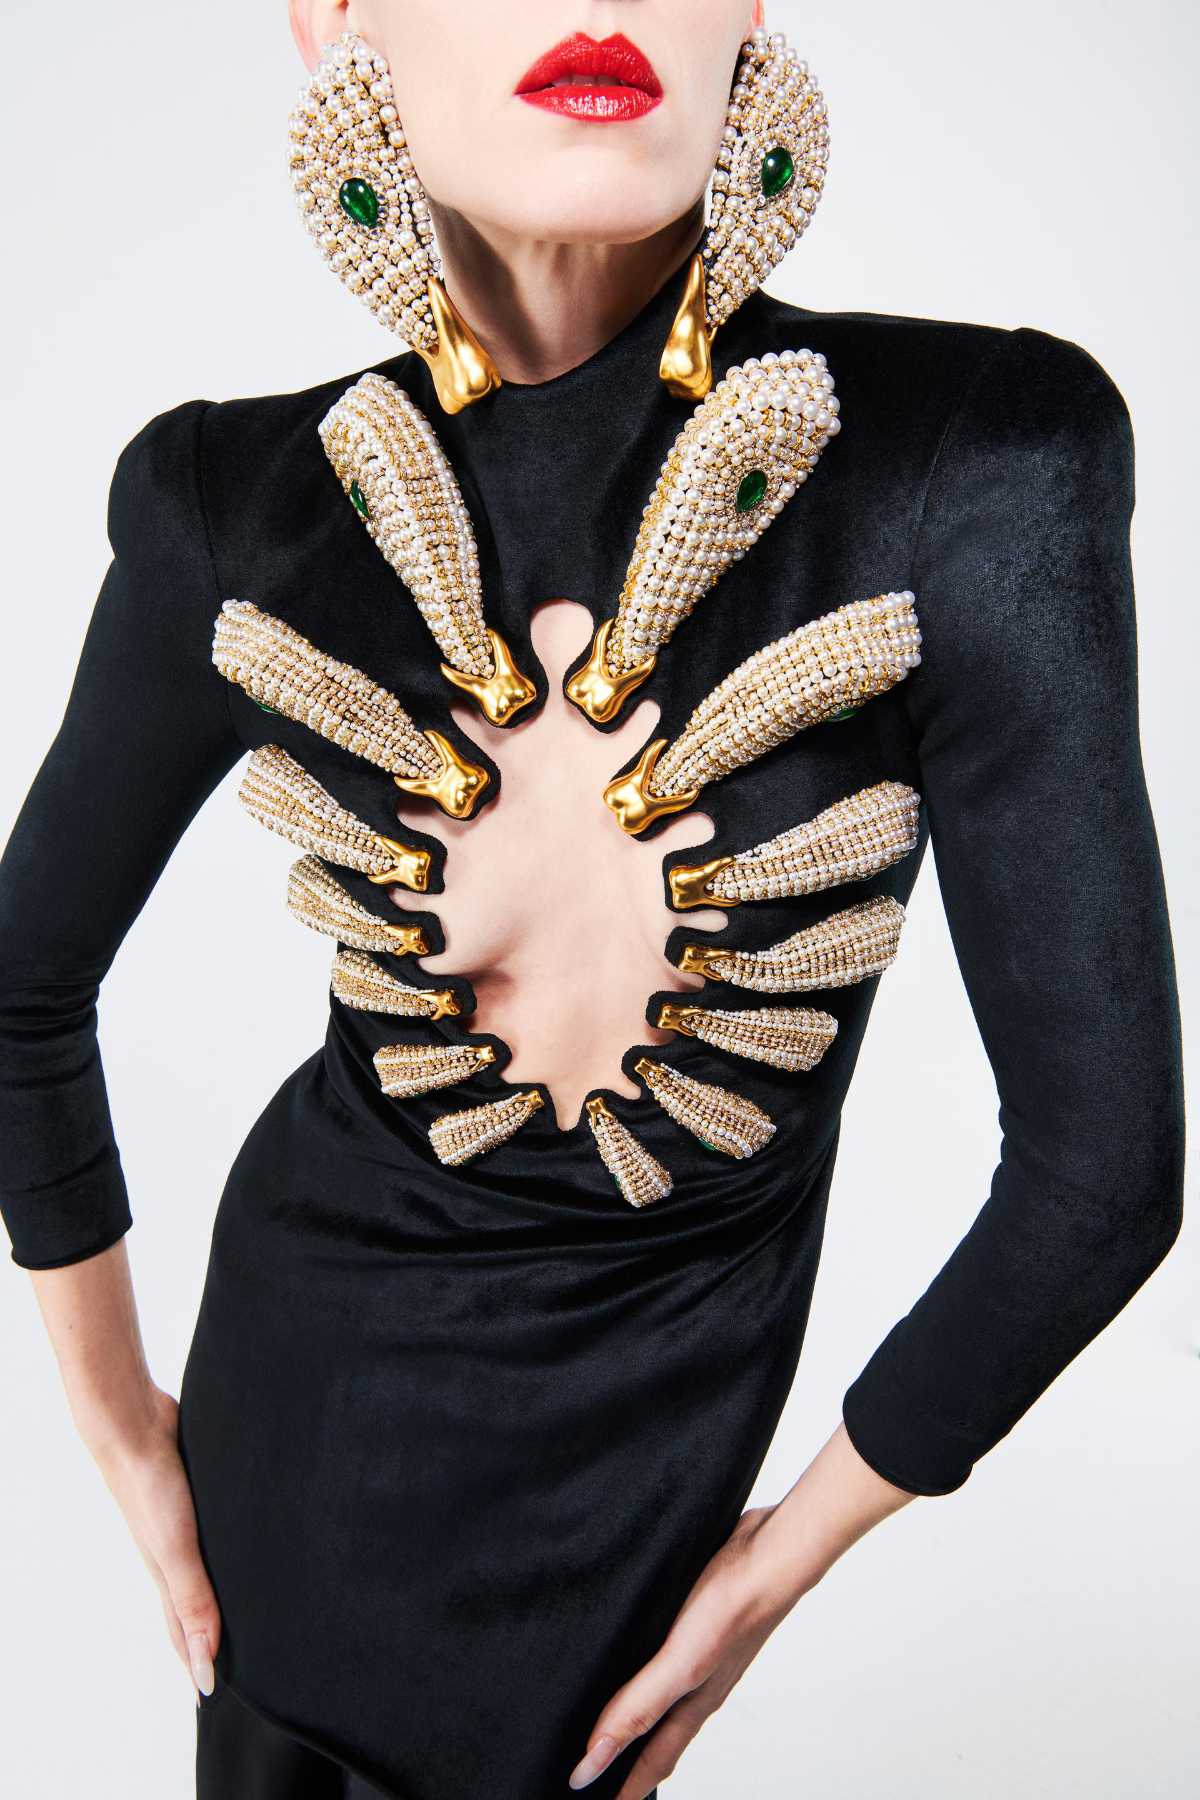 Emma Corrin Wore Schiaparelli Haute Couture At The 26th Critics Choice Awards